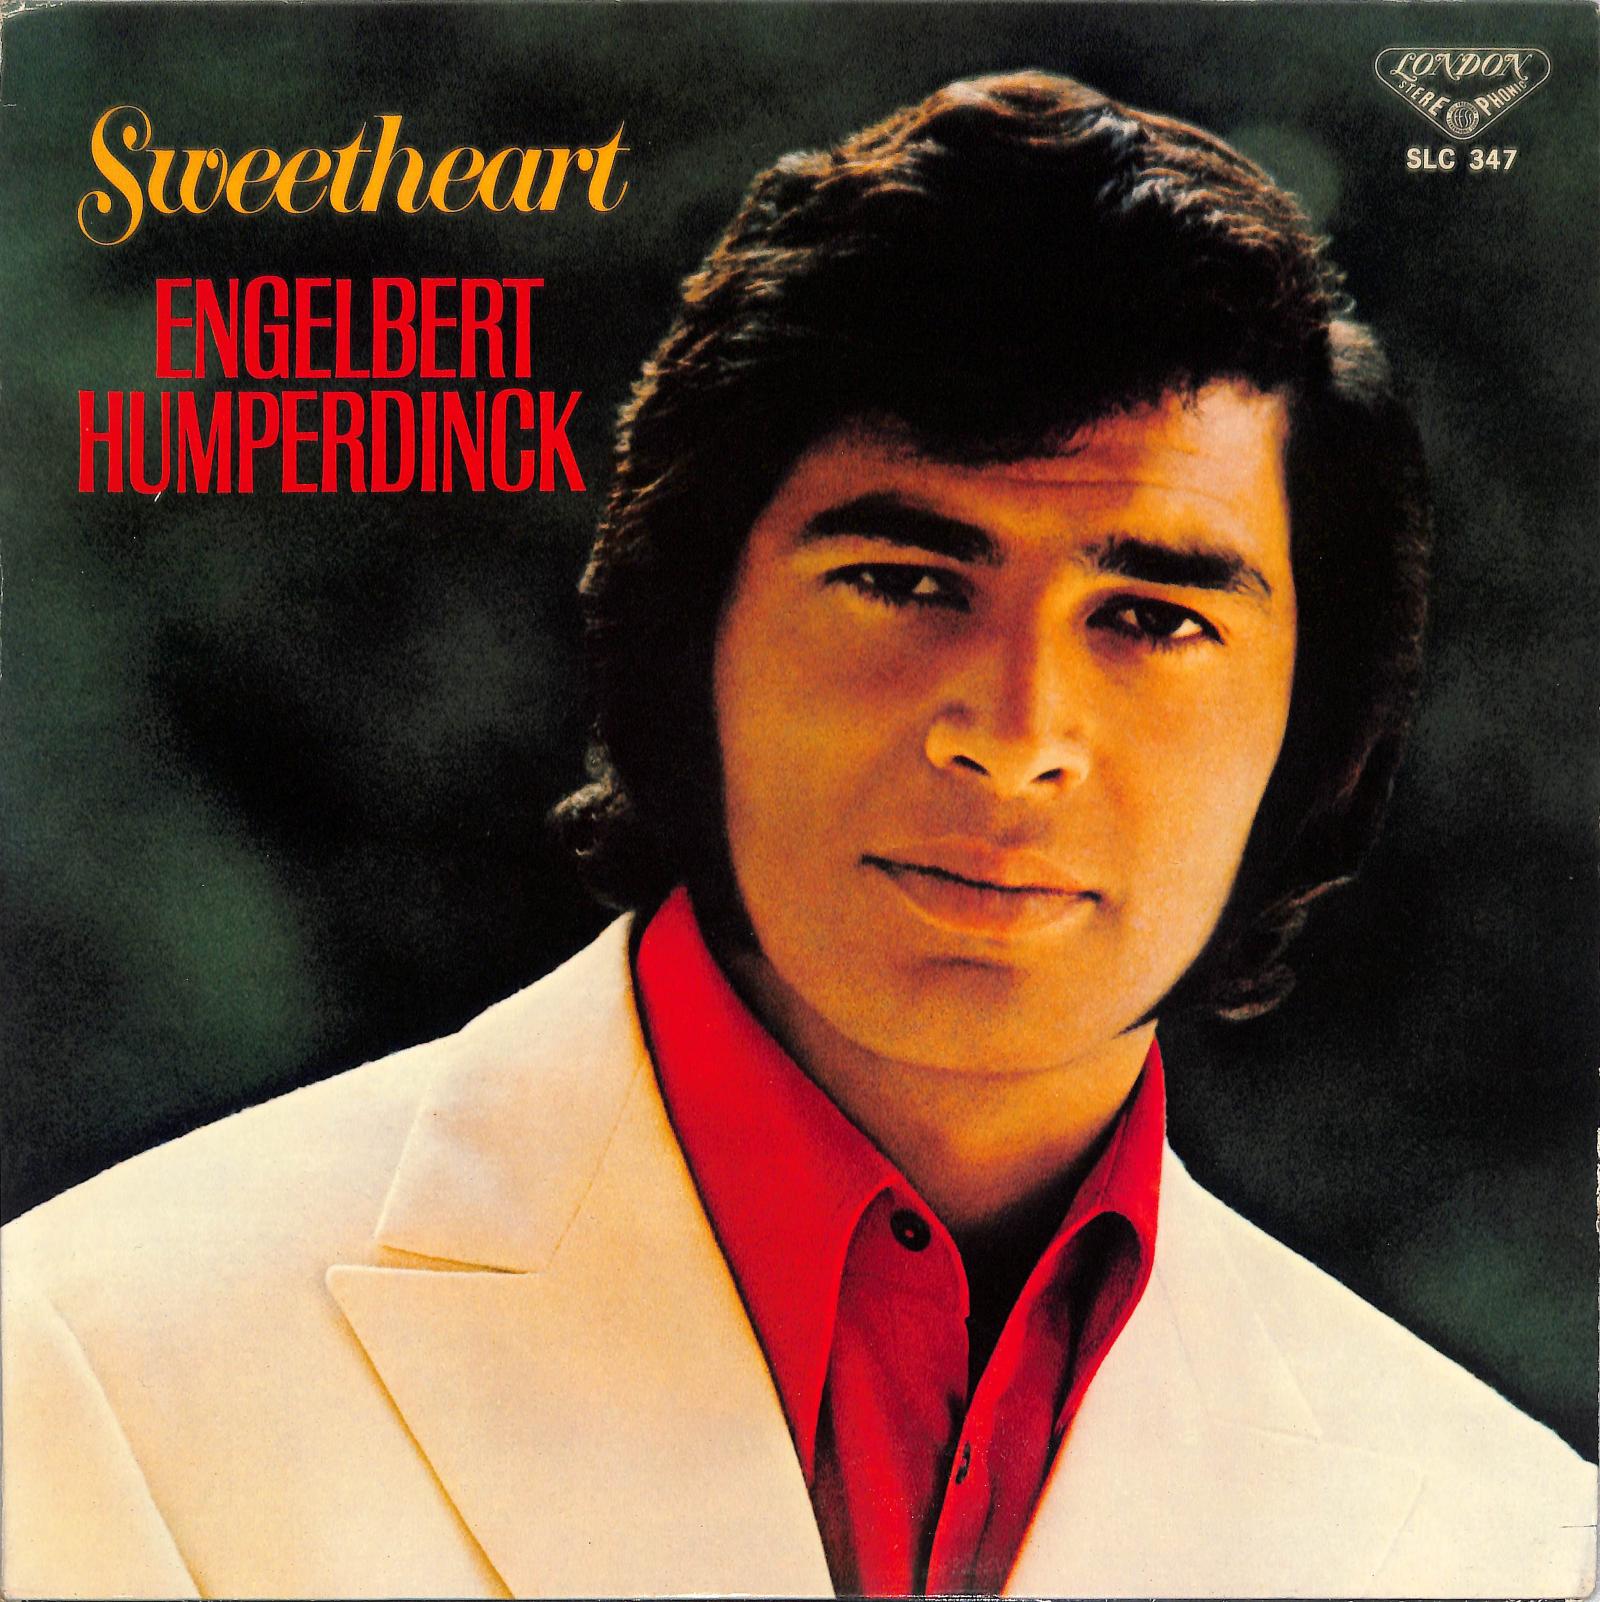 ENGELBERT HUMPERDINCK - Sweetheart